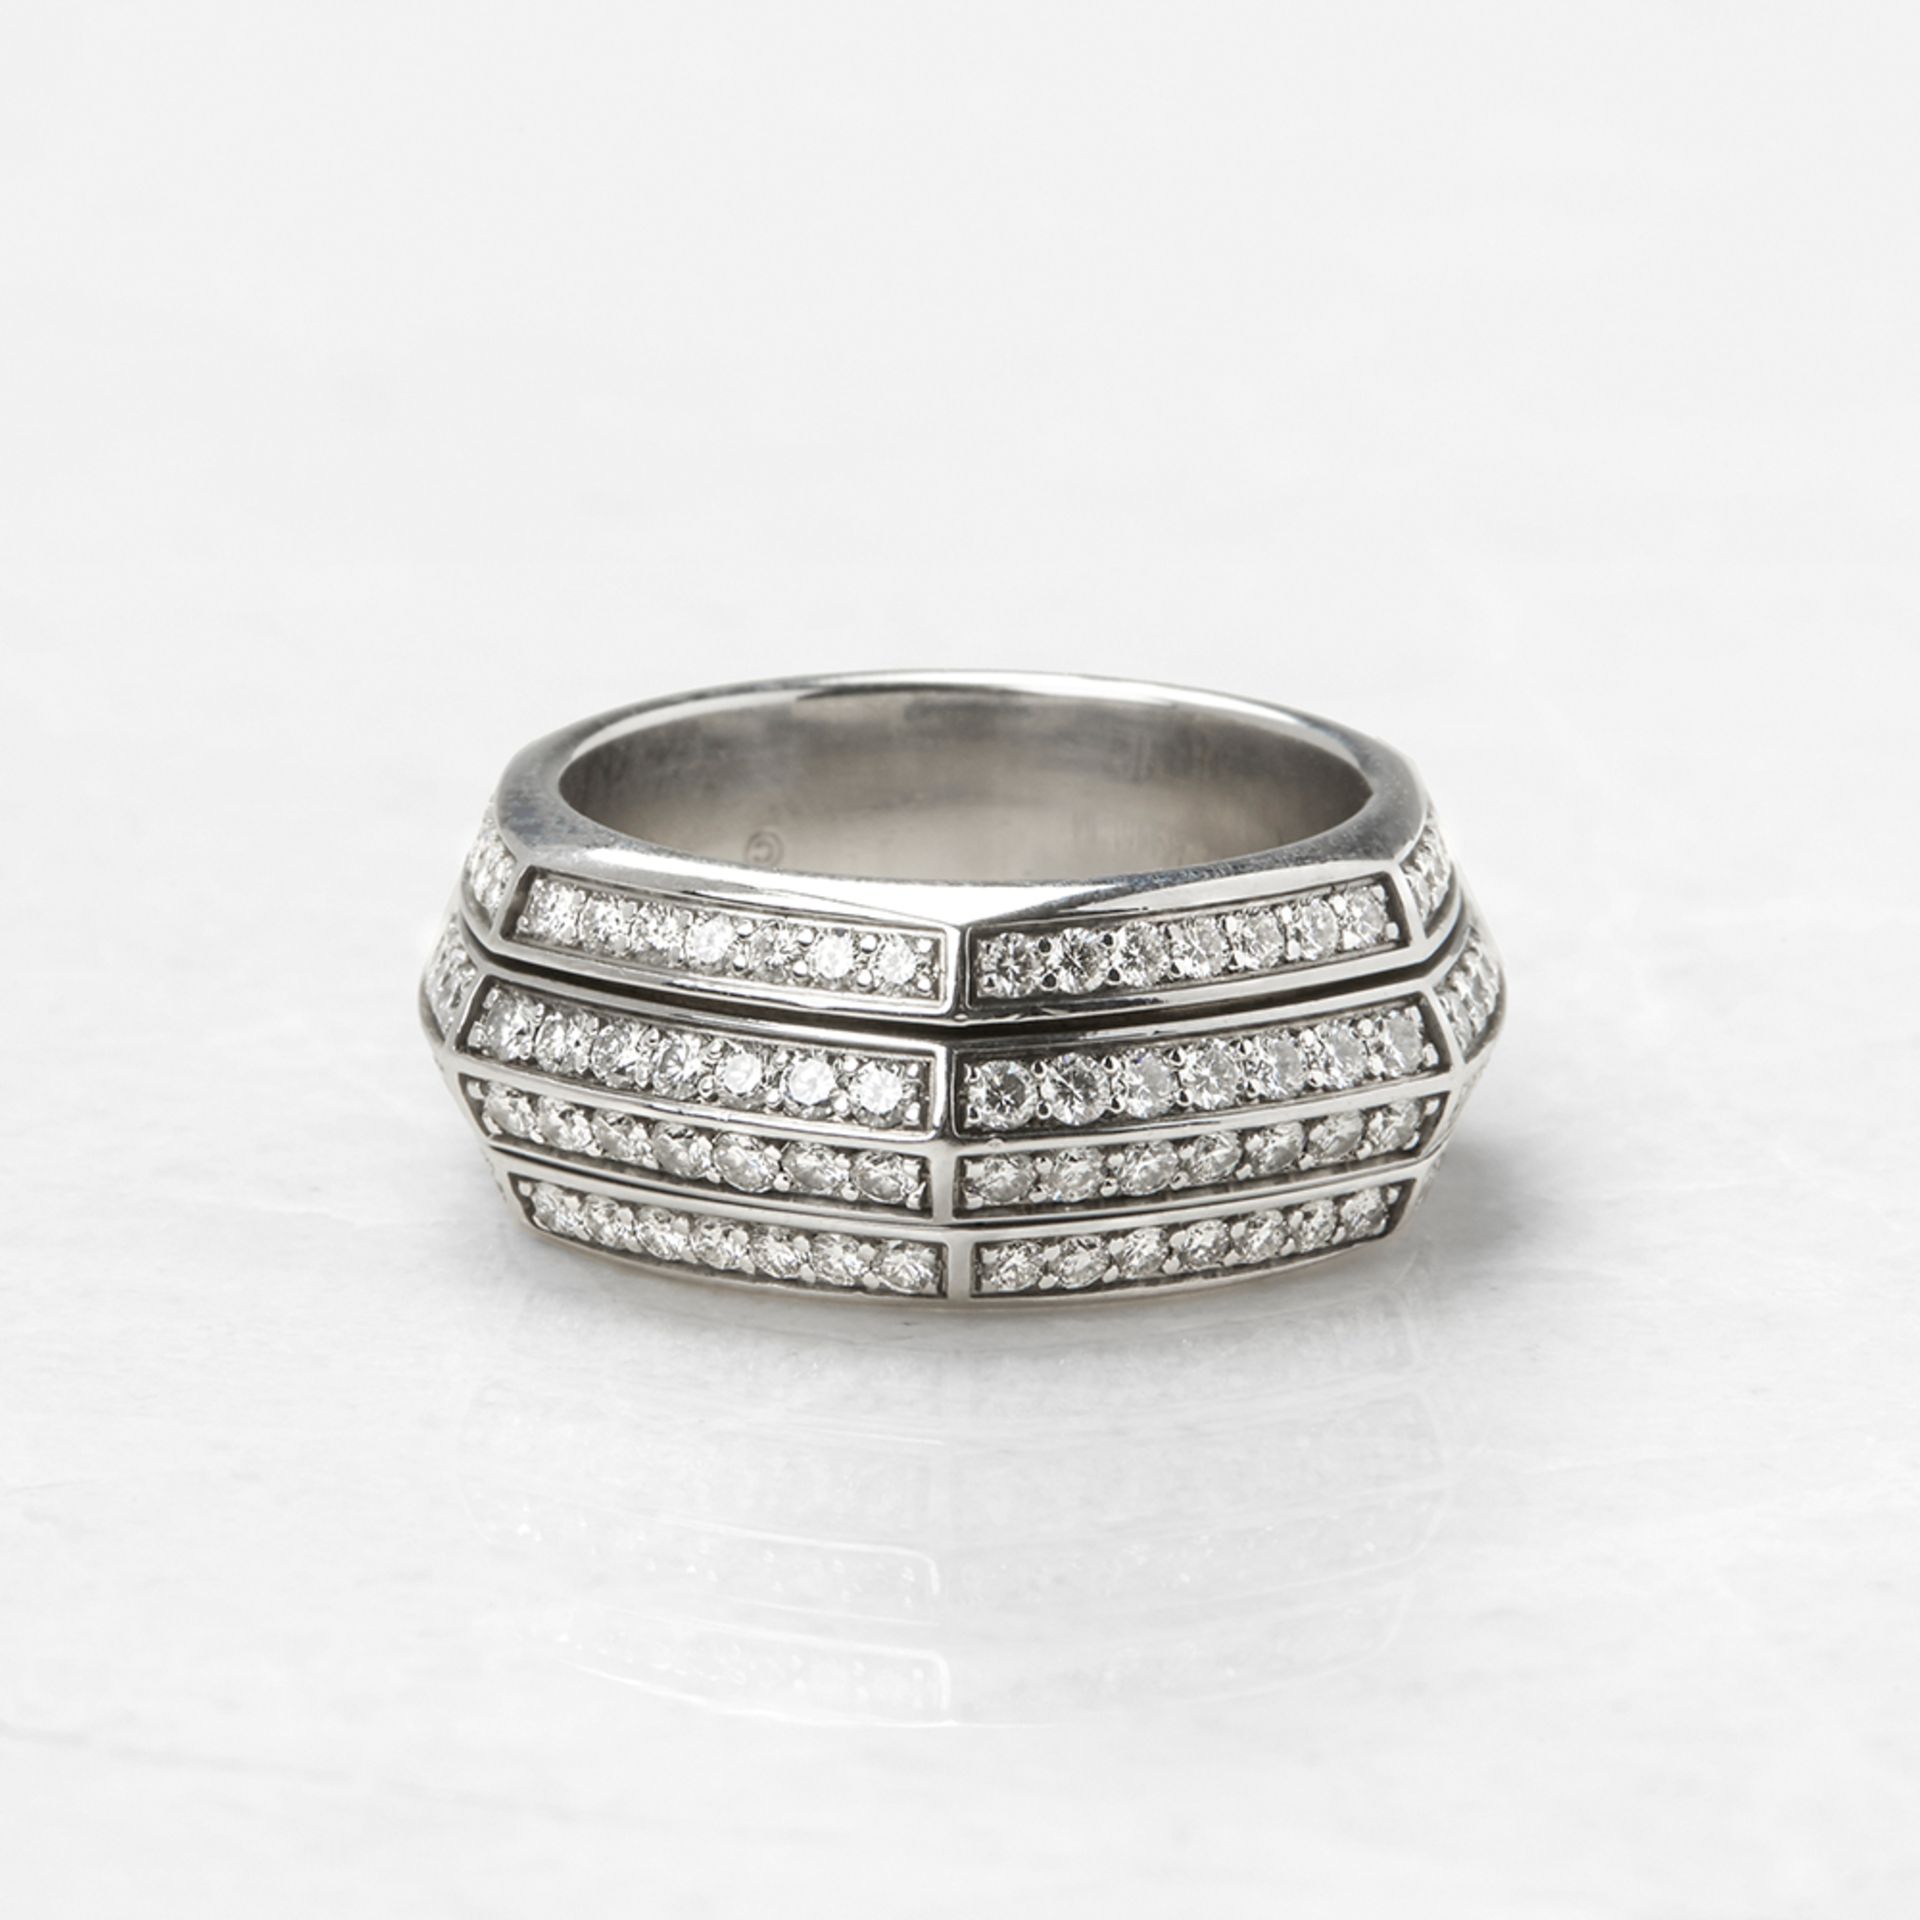 Piaget 18k White Gold Diamond Possession Ring - Image 2 of 7